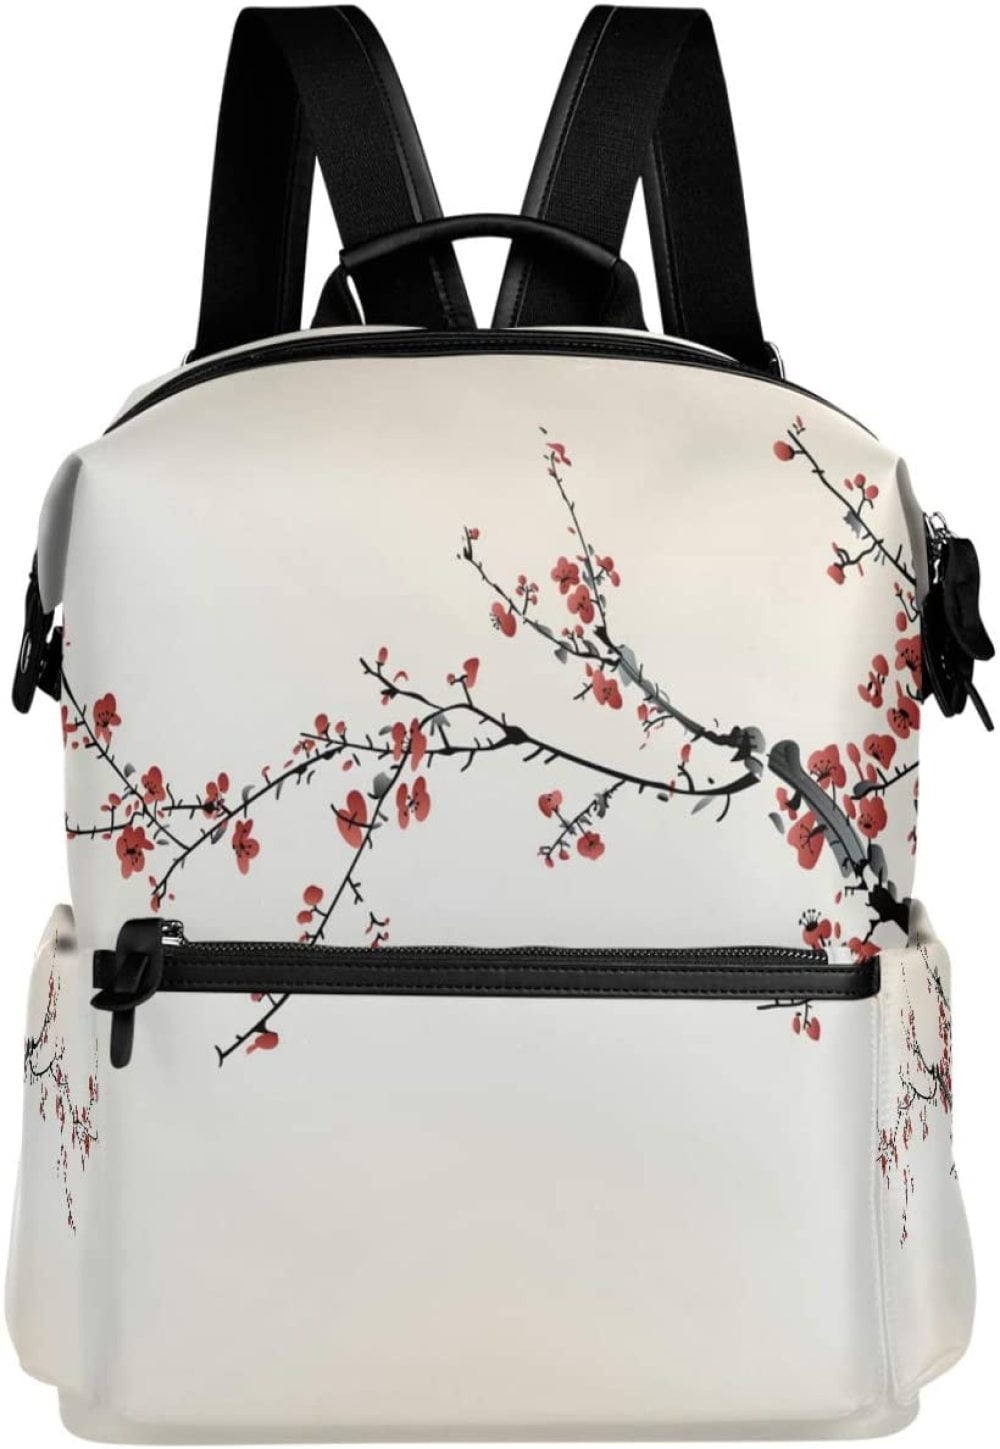 Oarencol Vintage Wintersweet Floral Backpack Japanese Cherry Blossom School  Book Bag Travel Hiking Camping Laptop Daypack